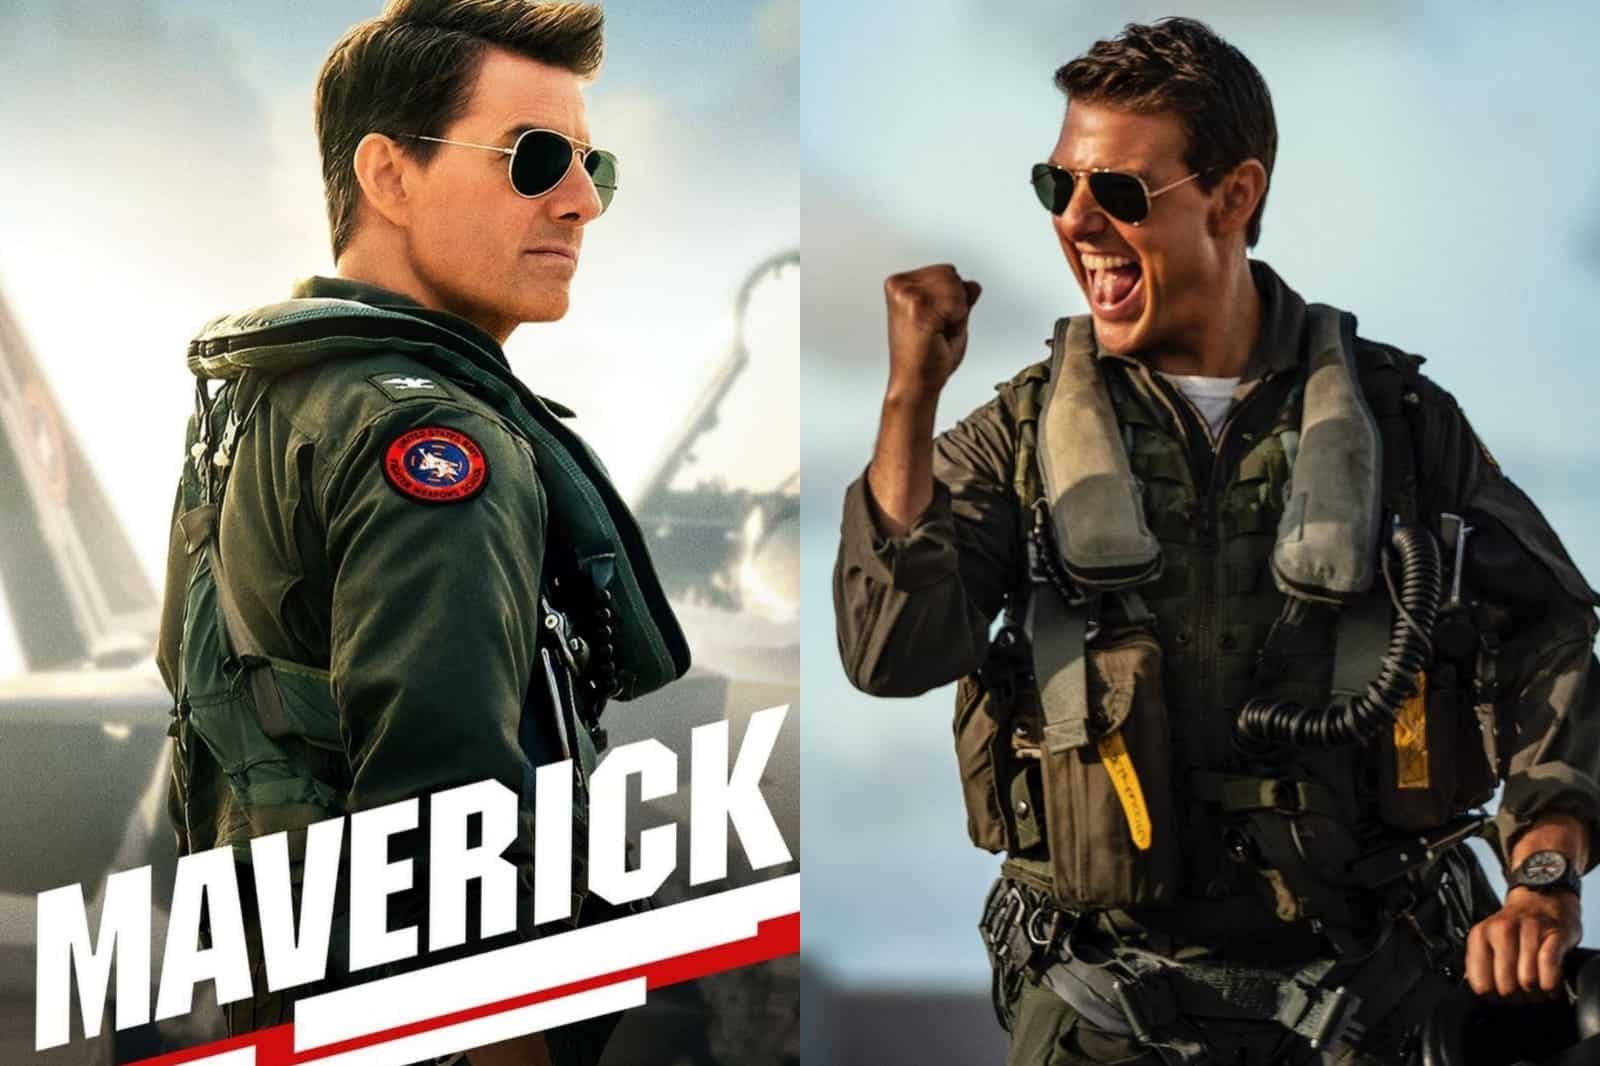 Top Gun: Maverick - Movies on Google Play